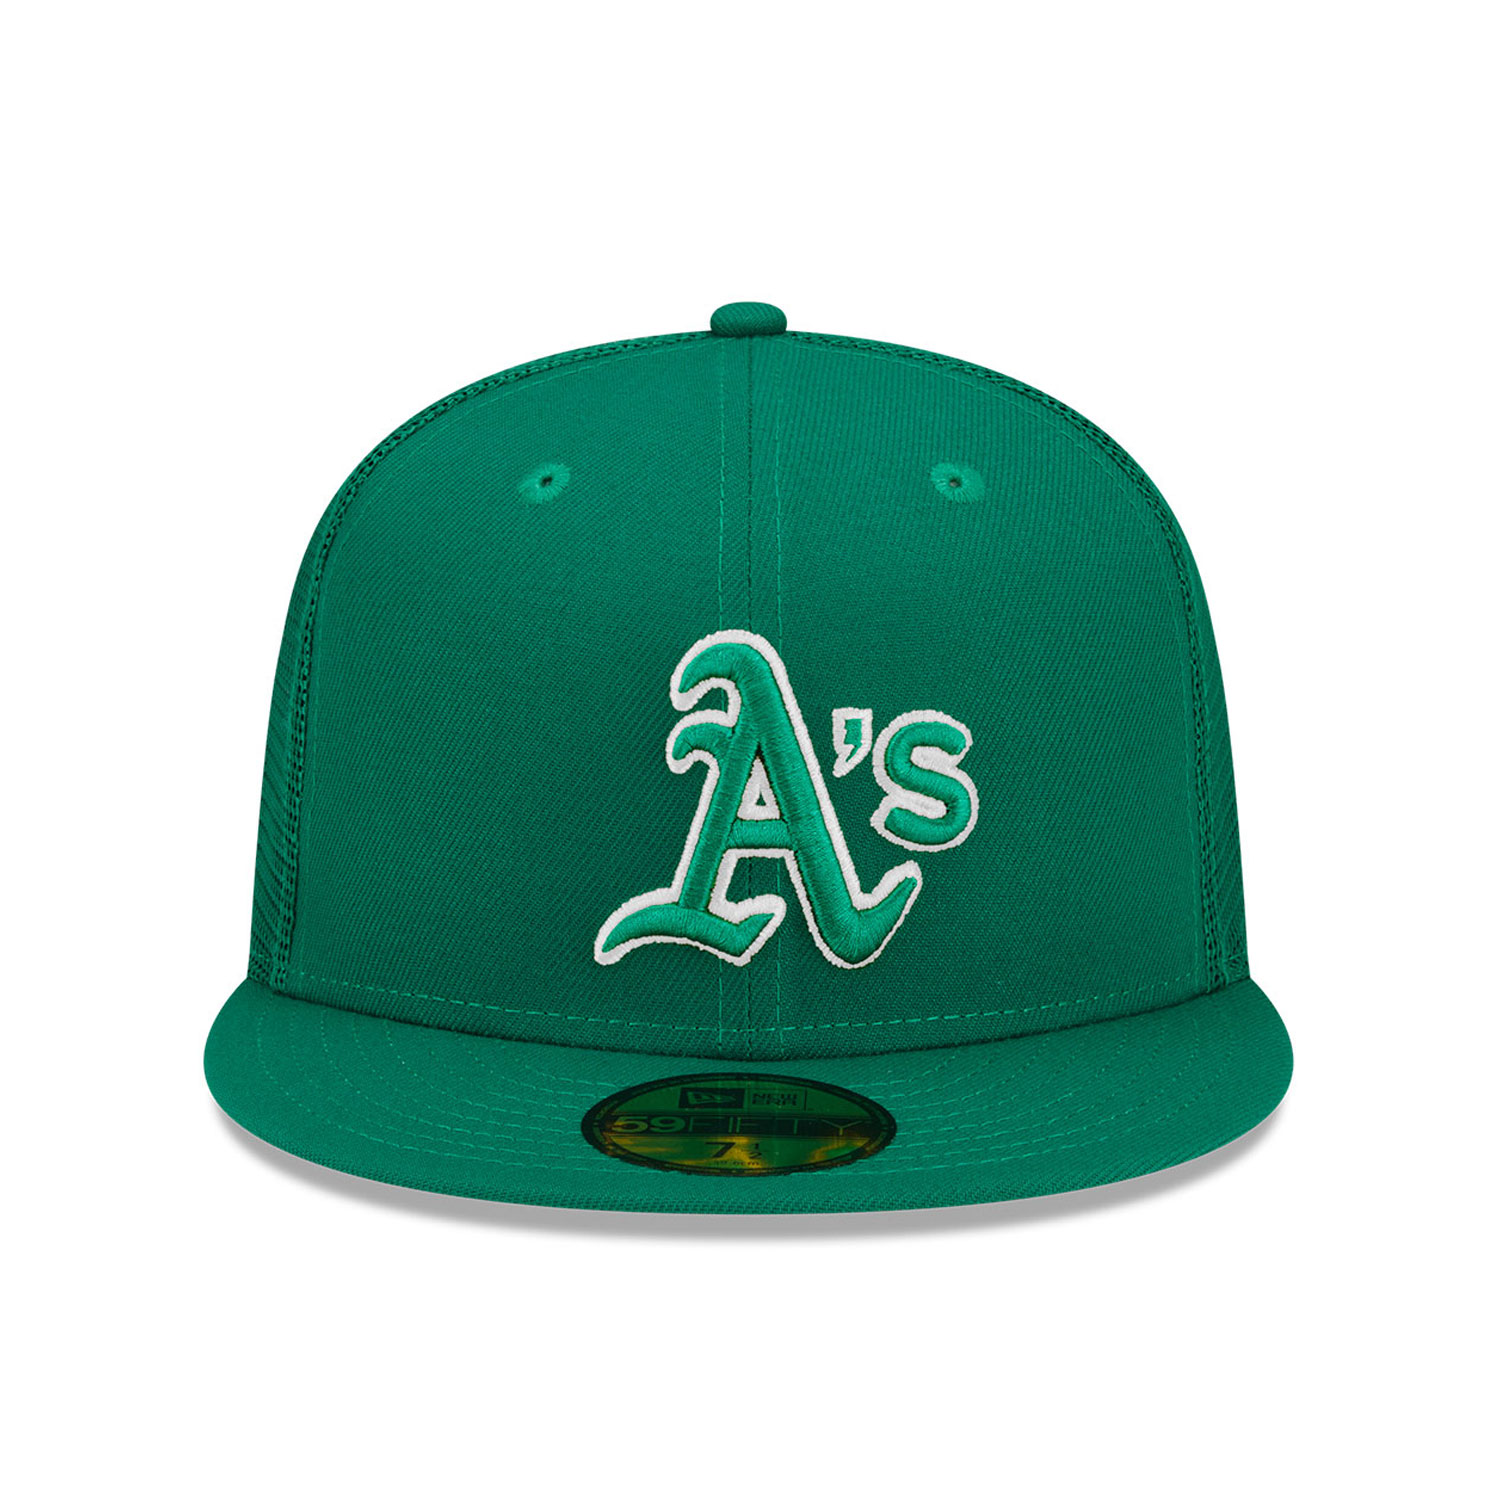 Oakland Athletics MLB St Patricks Day Green 59FIFTY Cap